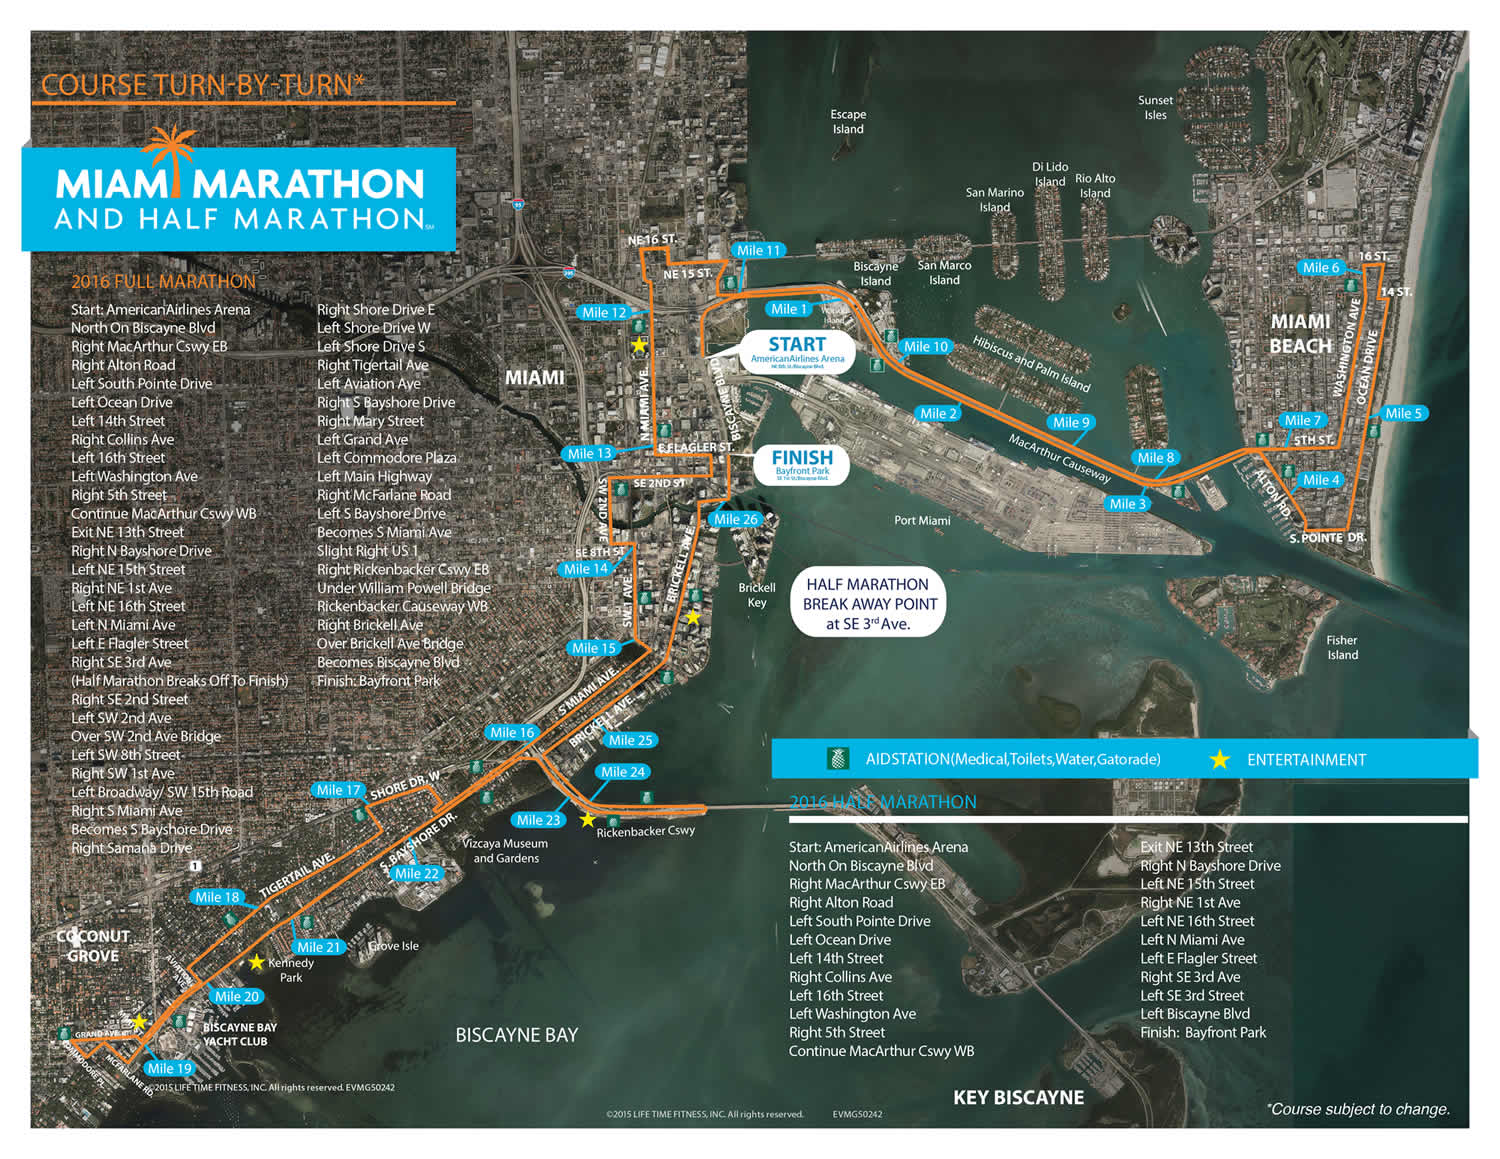 Miami Marathon Course Map